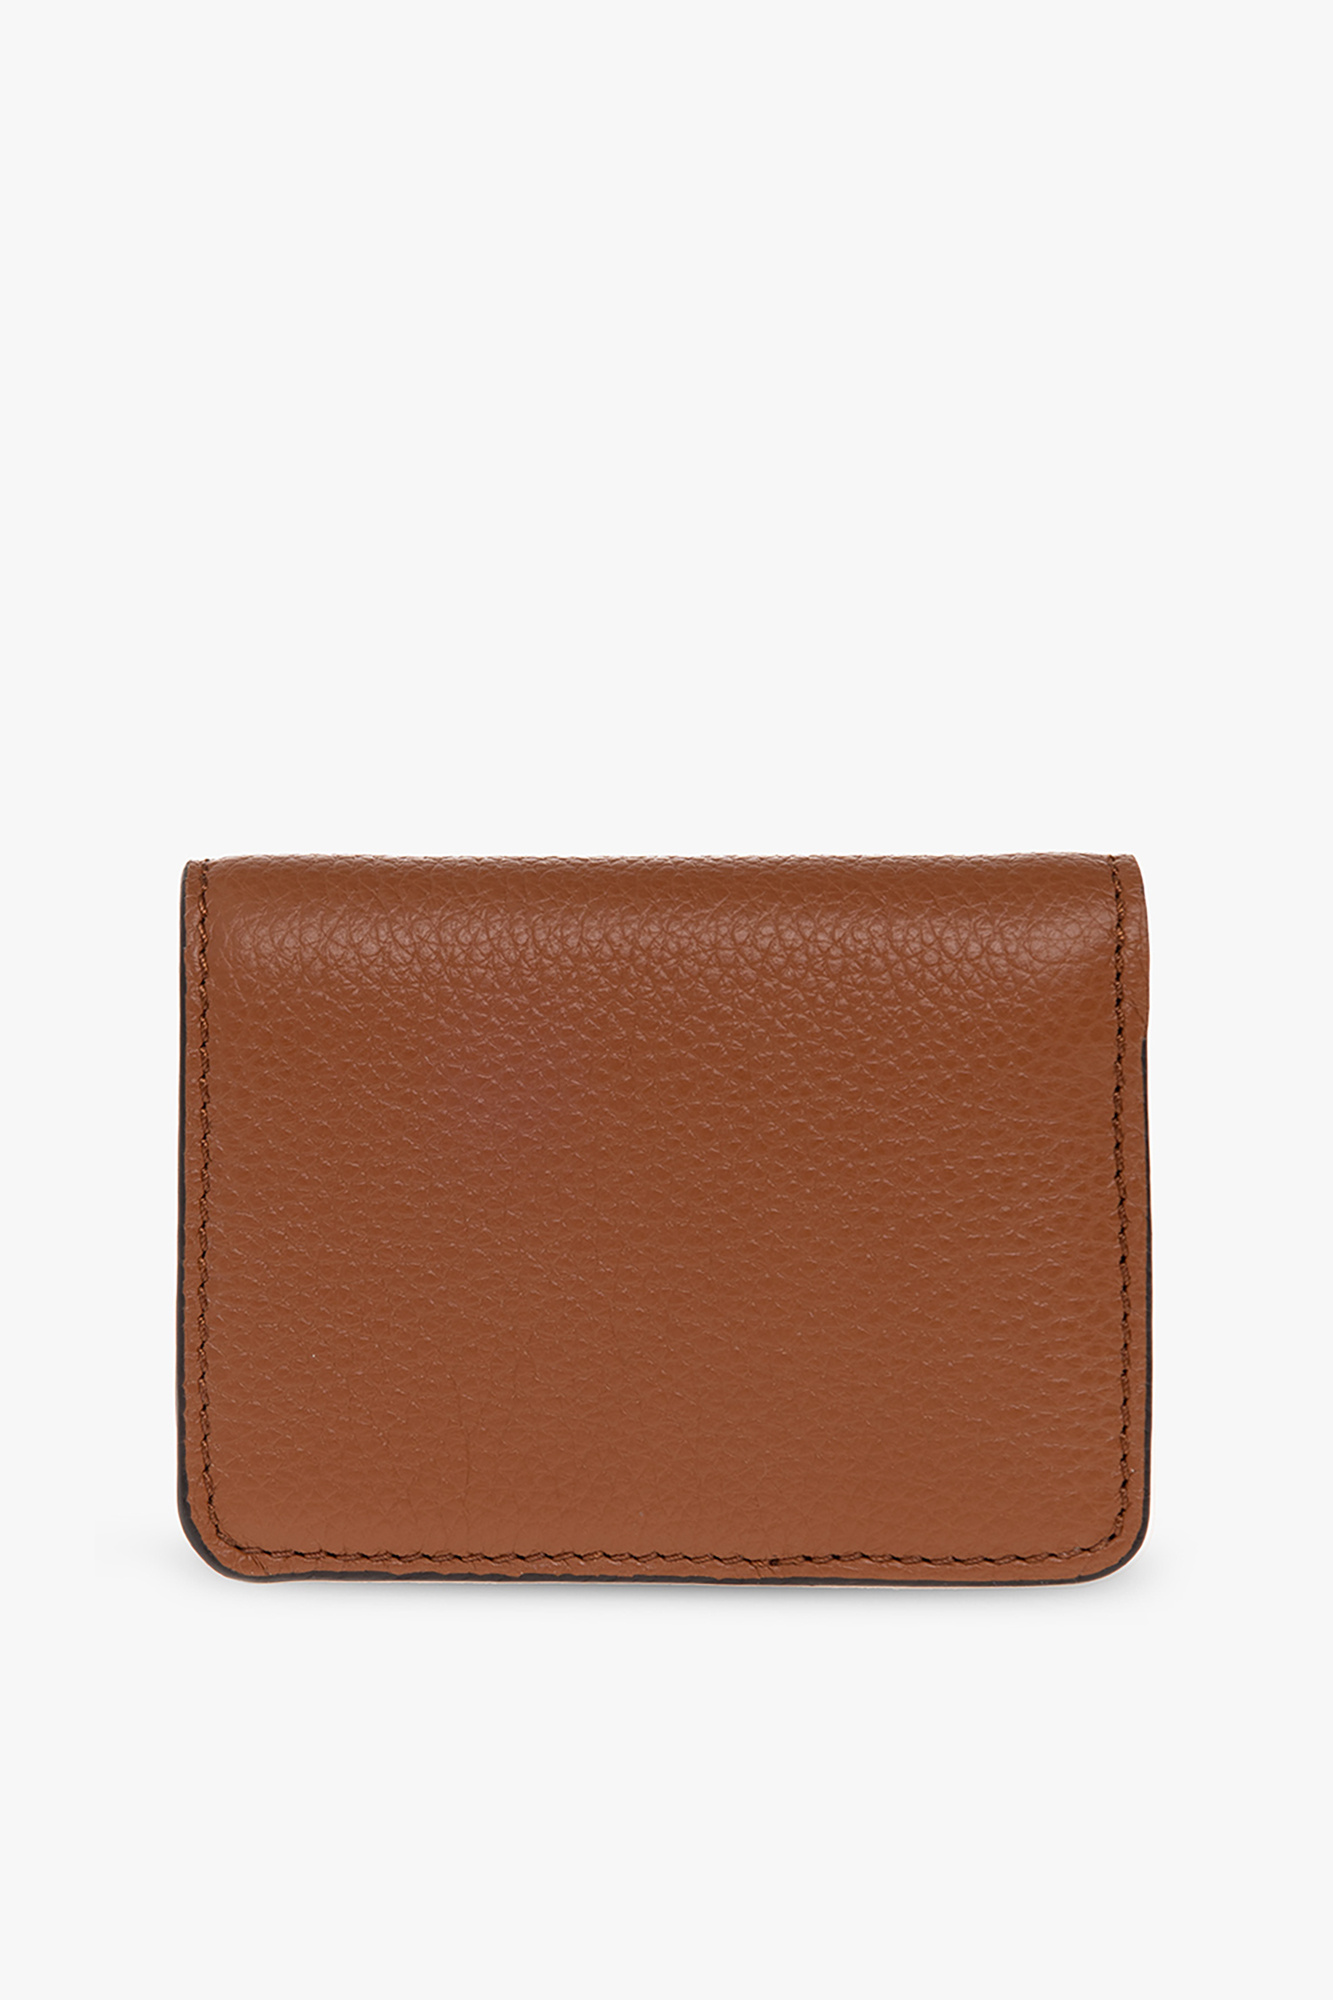 Chloé ‘Marcie Small’ wallet